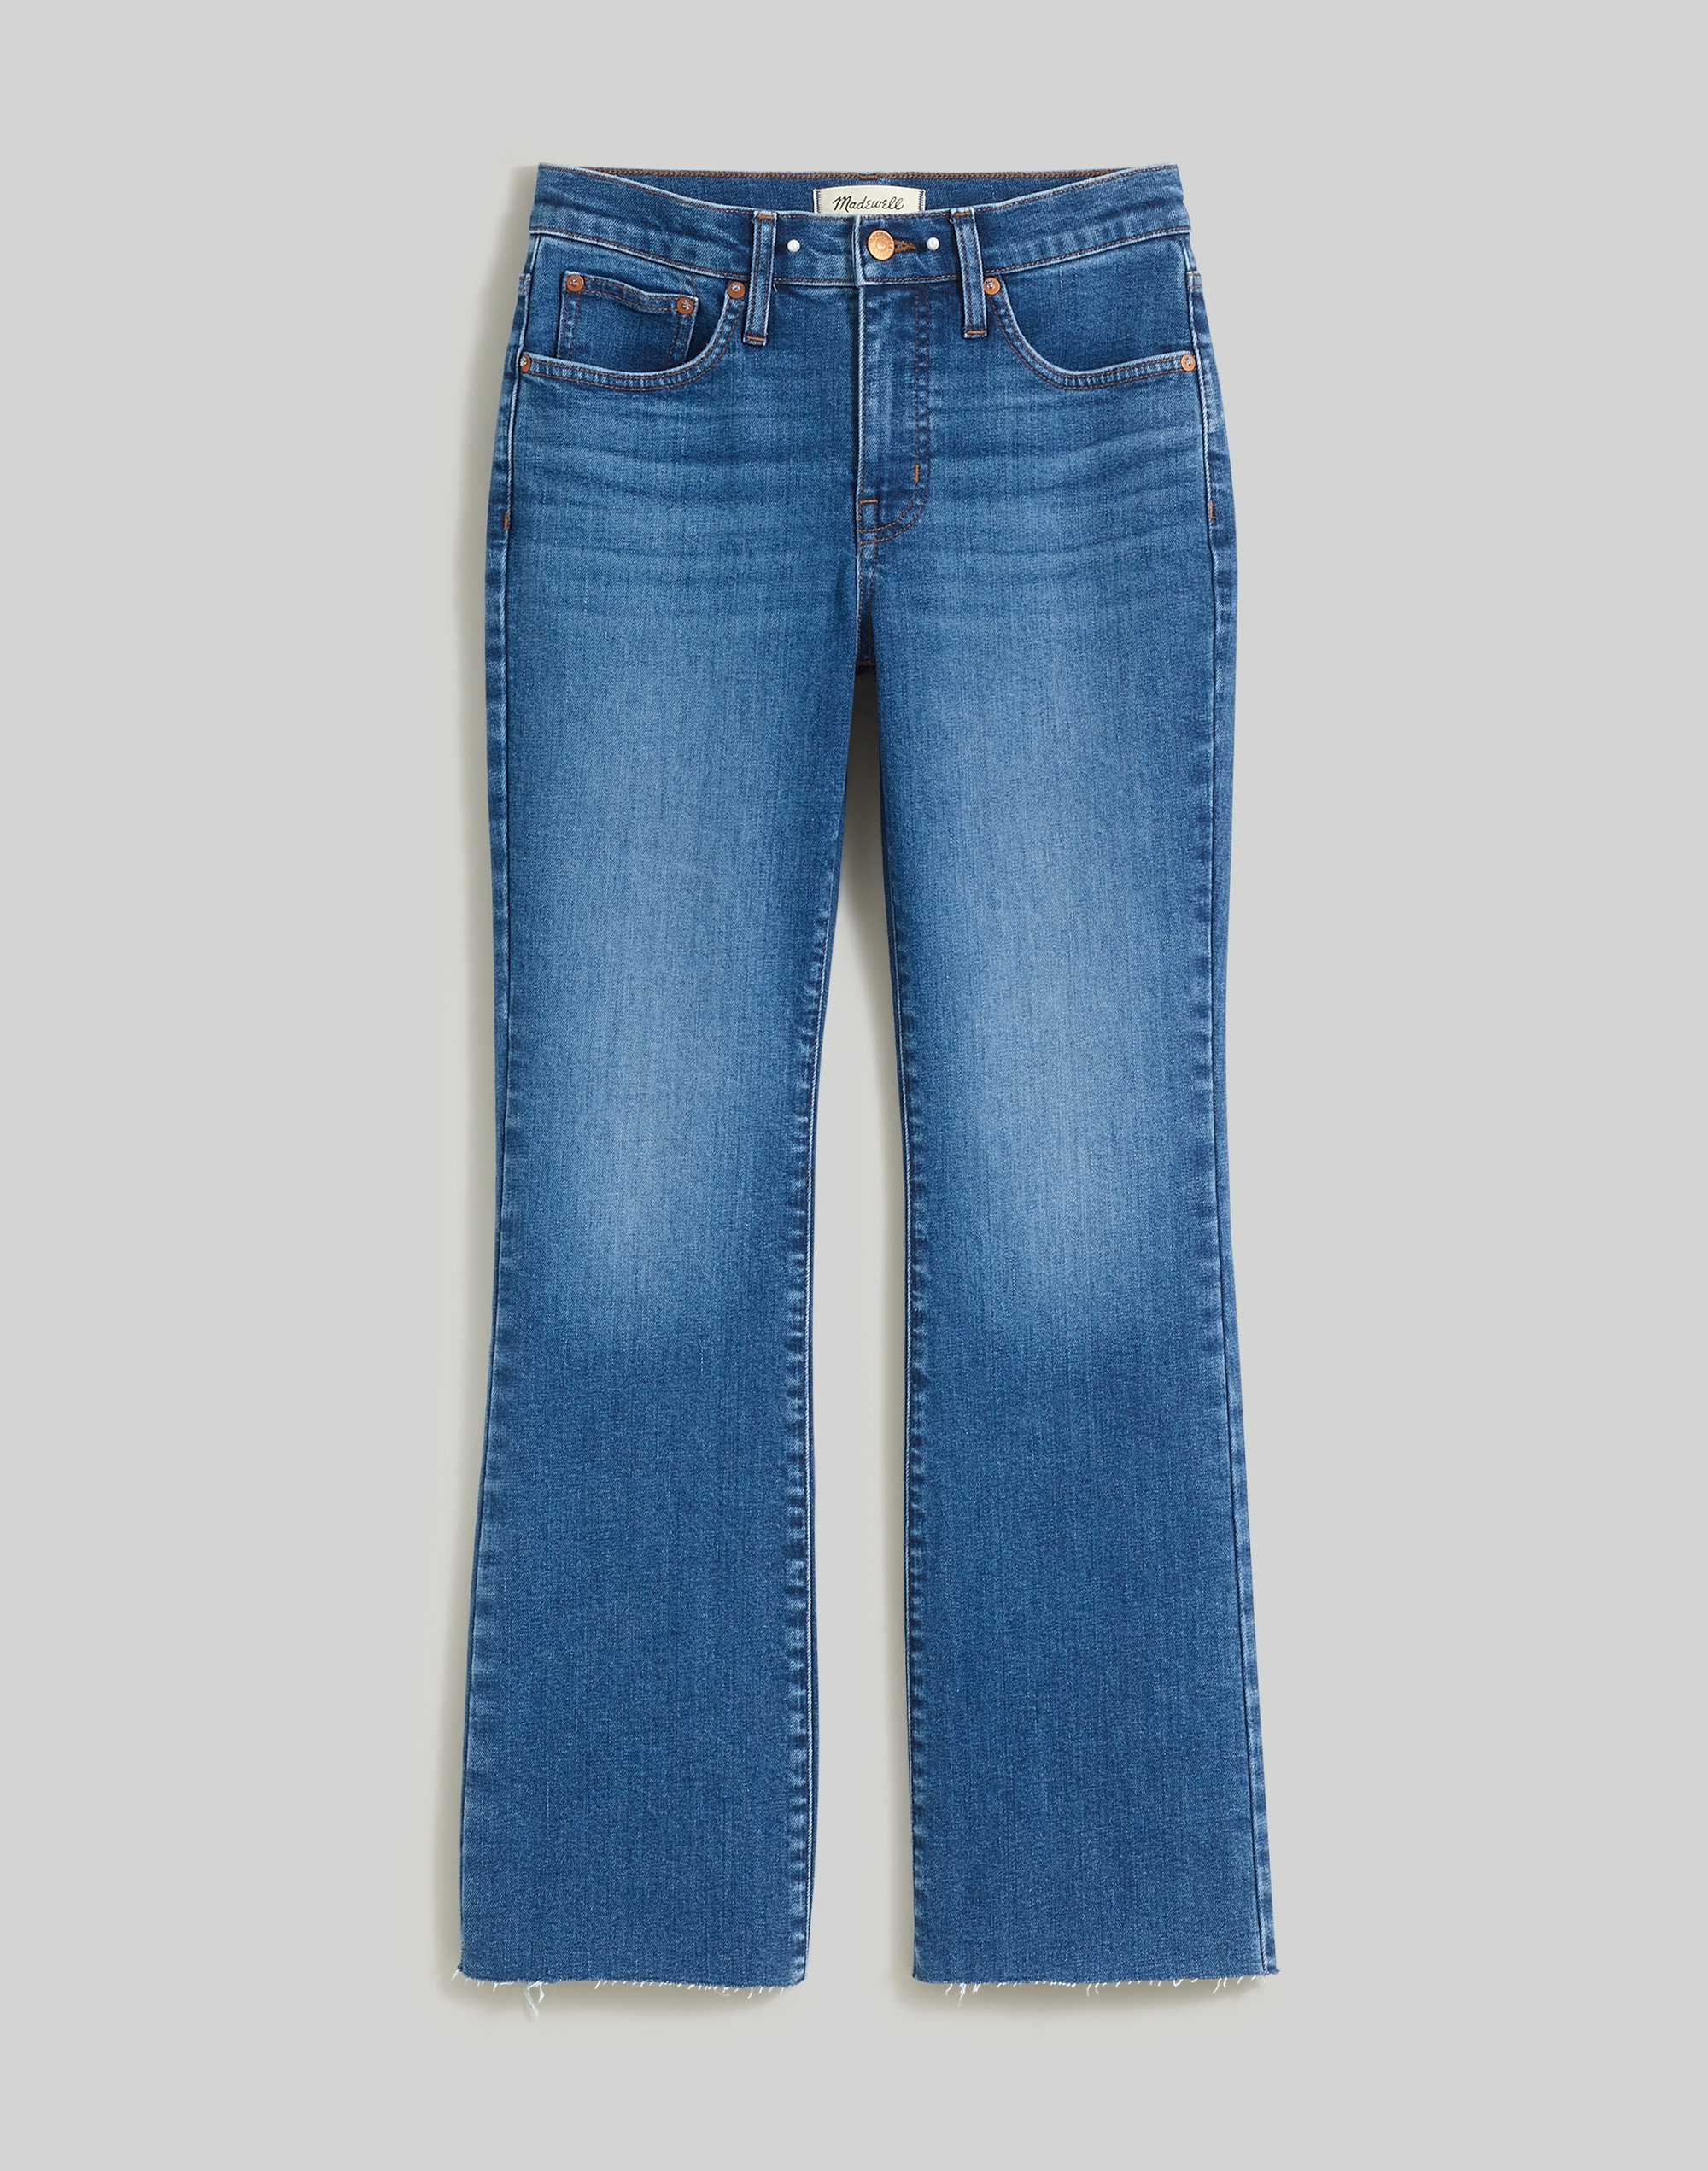 Kick Out Crop Jeans Brinton Wash: Raw-Hem Edition